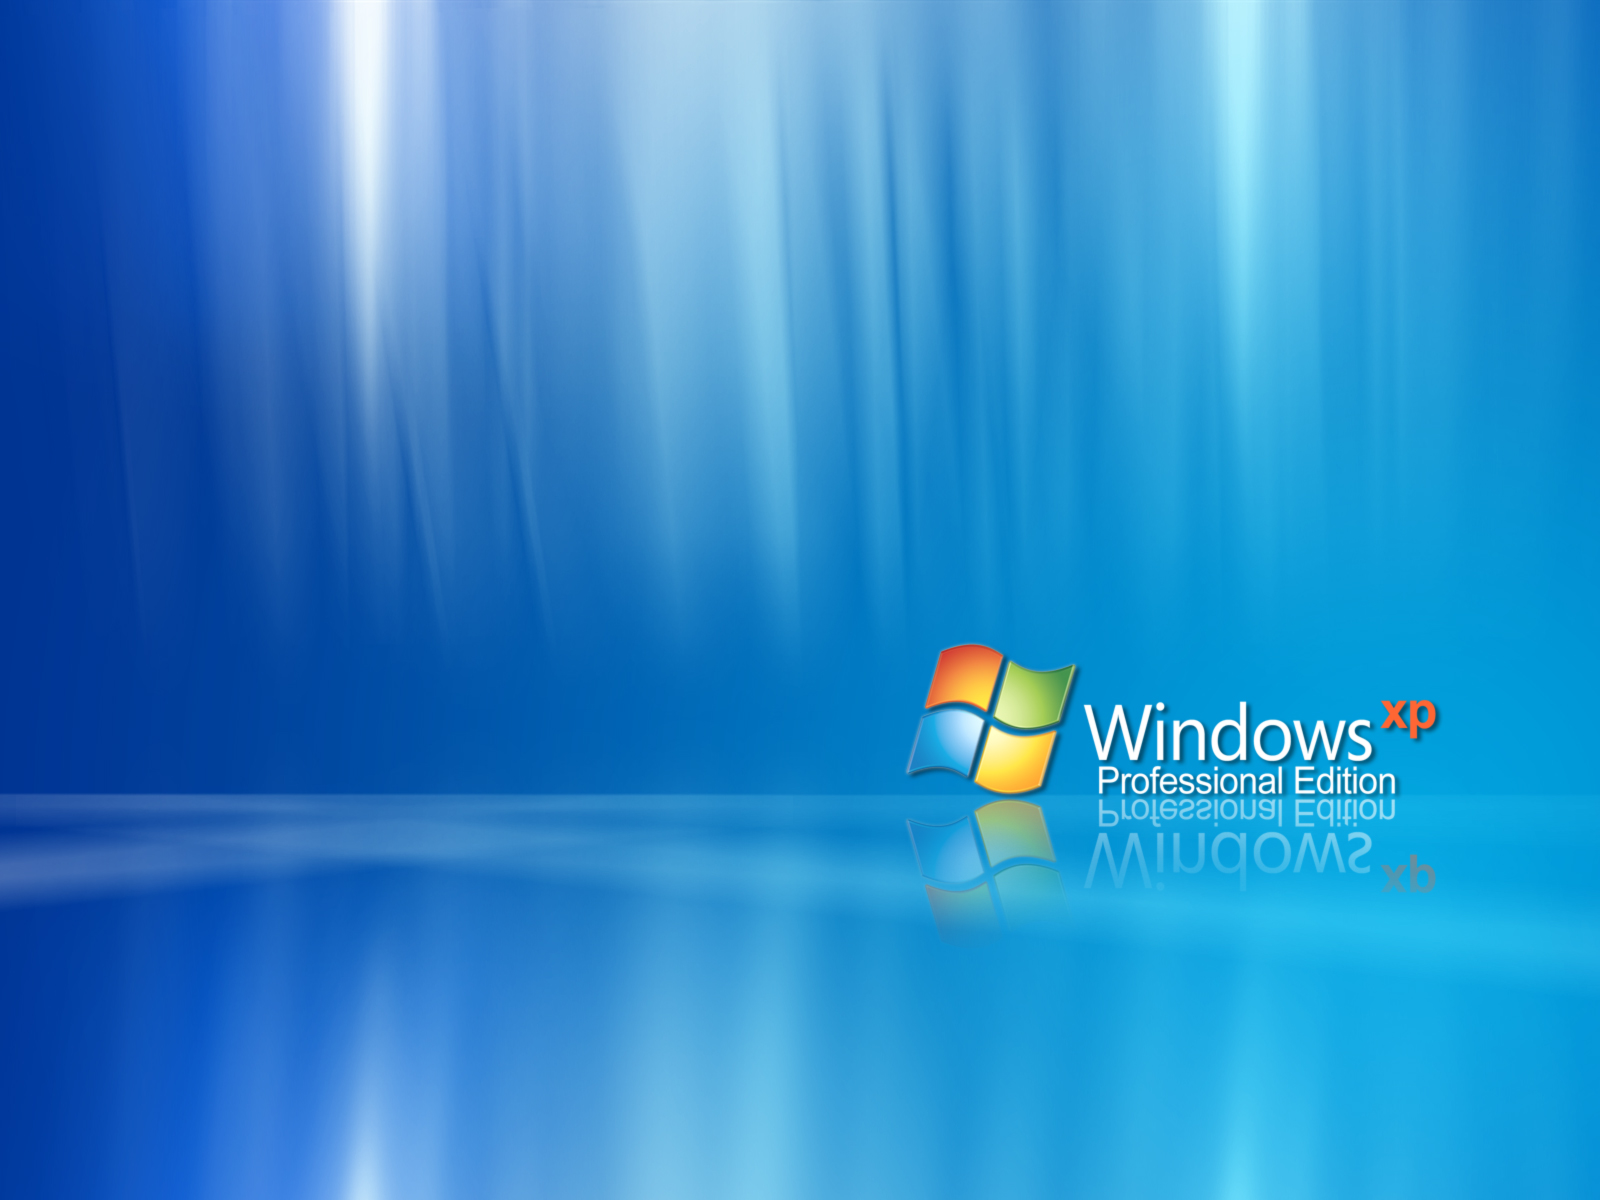 Windows Xp Pro Wallpaper Jpg